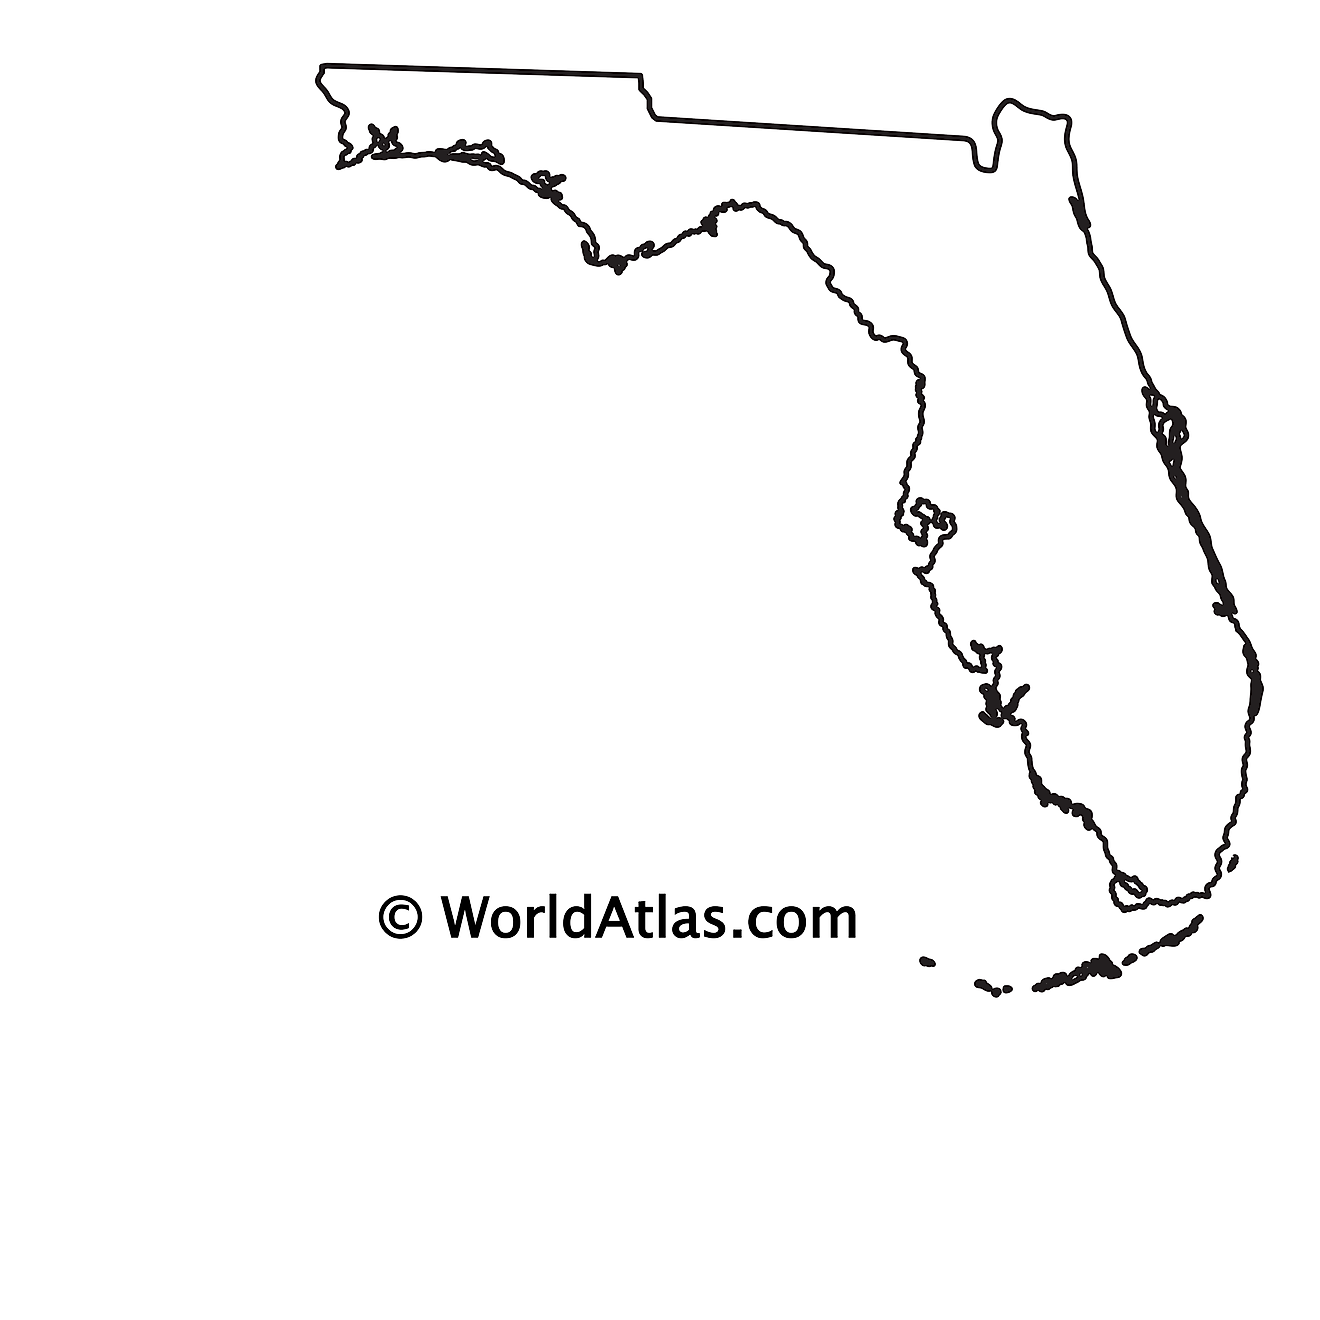 Port St. Lucie, Florida - WorldAtlas